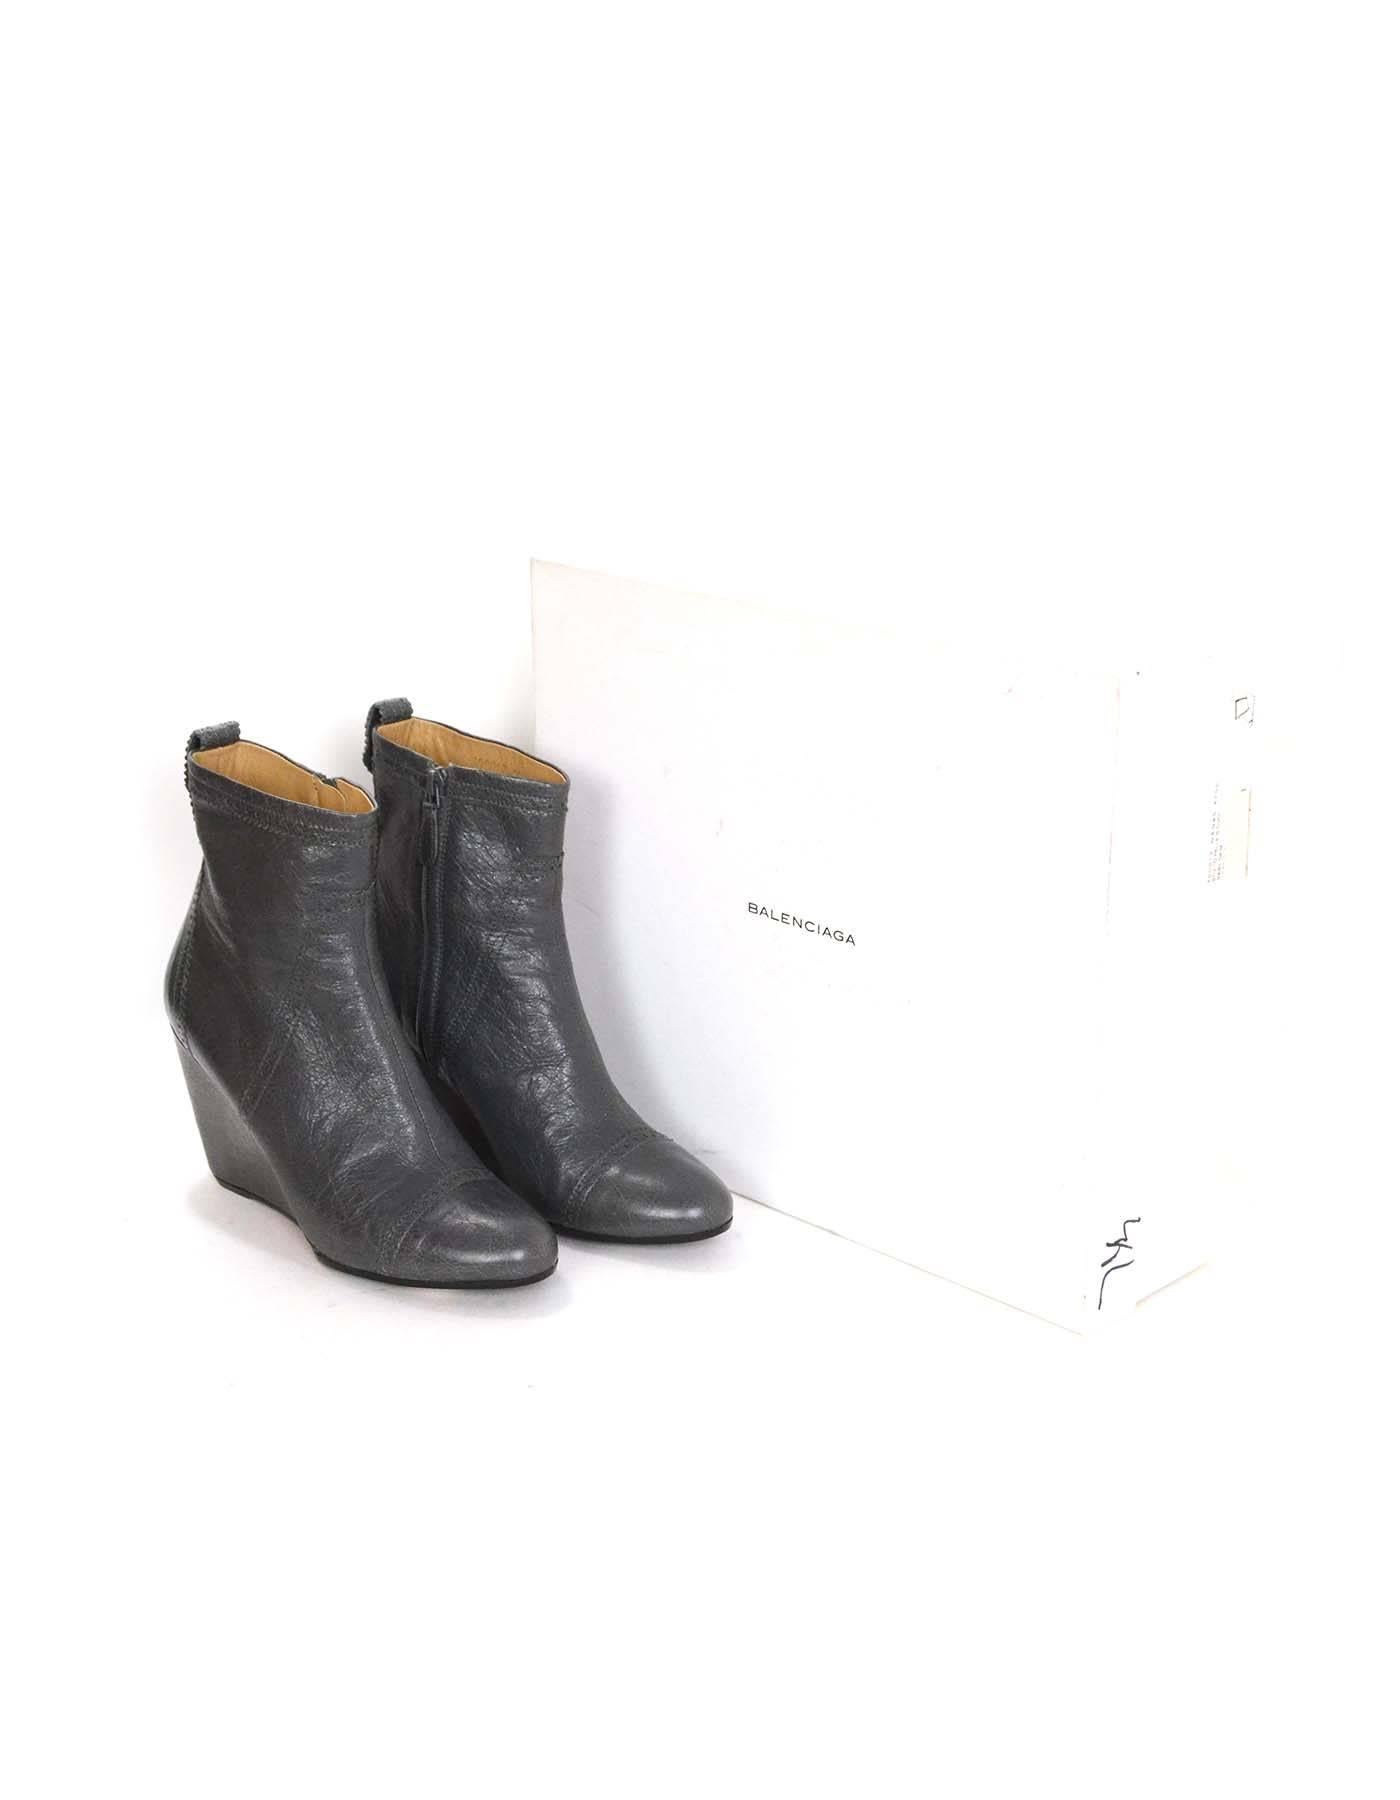 Balenciaga Grey Leather Brogue Ankle Wedge Boots sz 41 1